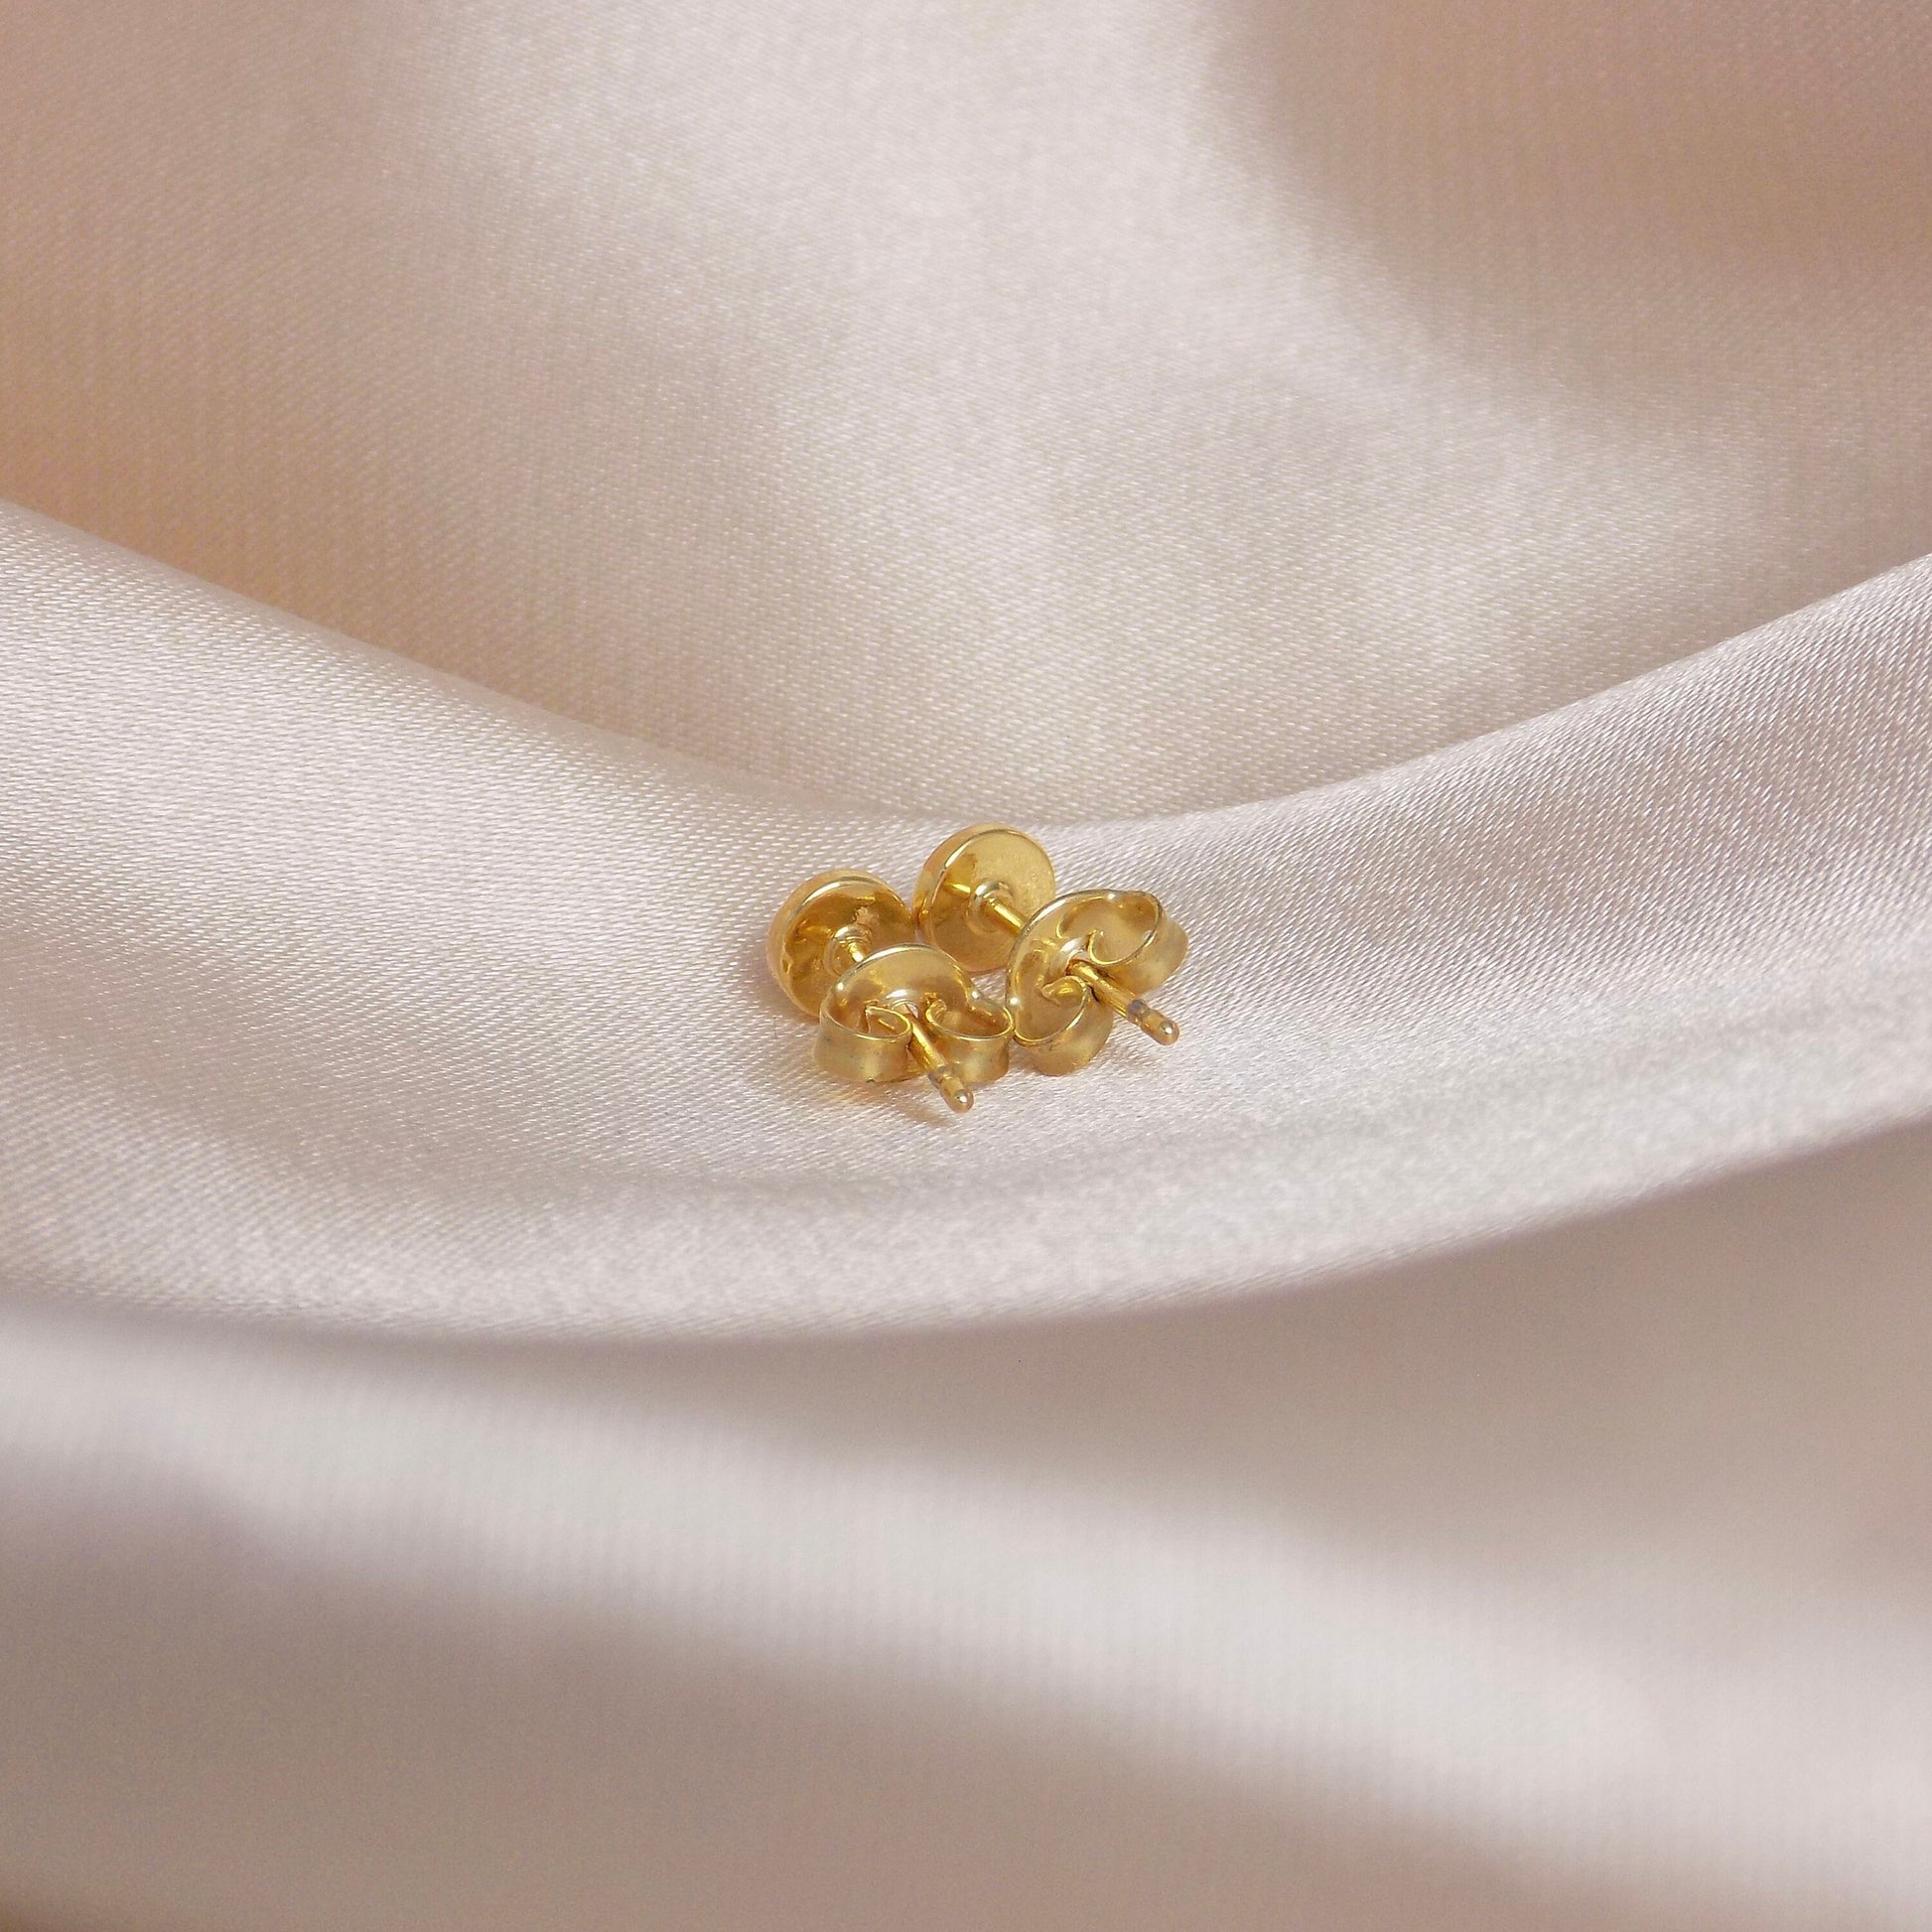 Tiny Opal Stud Earrings Gold, 4mm, October Birthstone Studs, Gift Women, M6-786